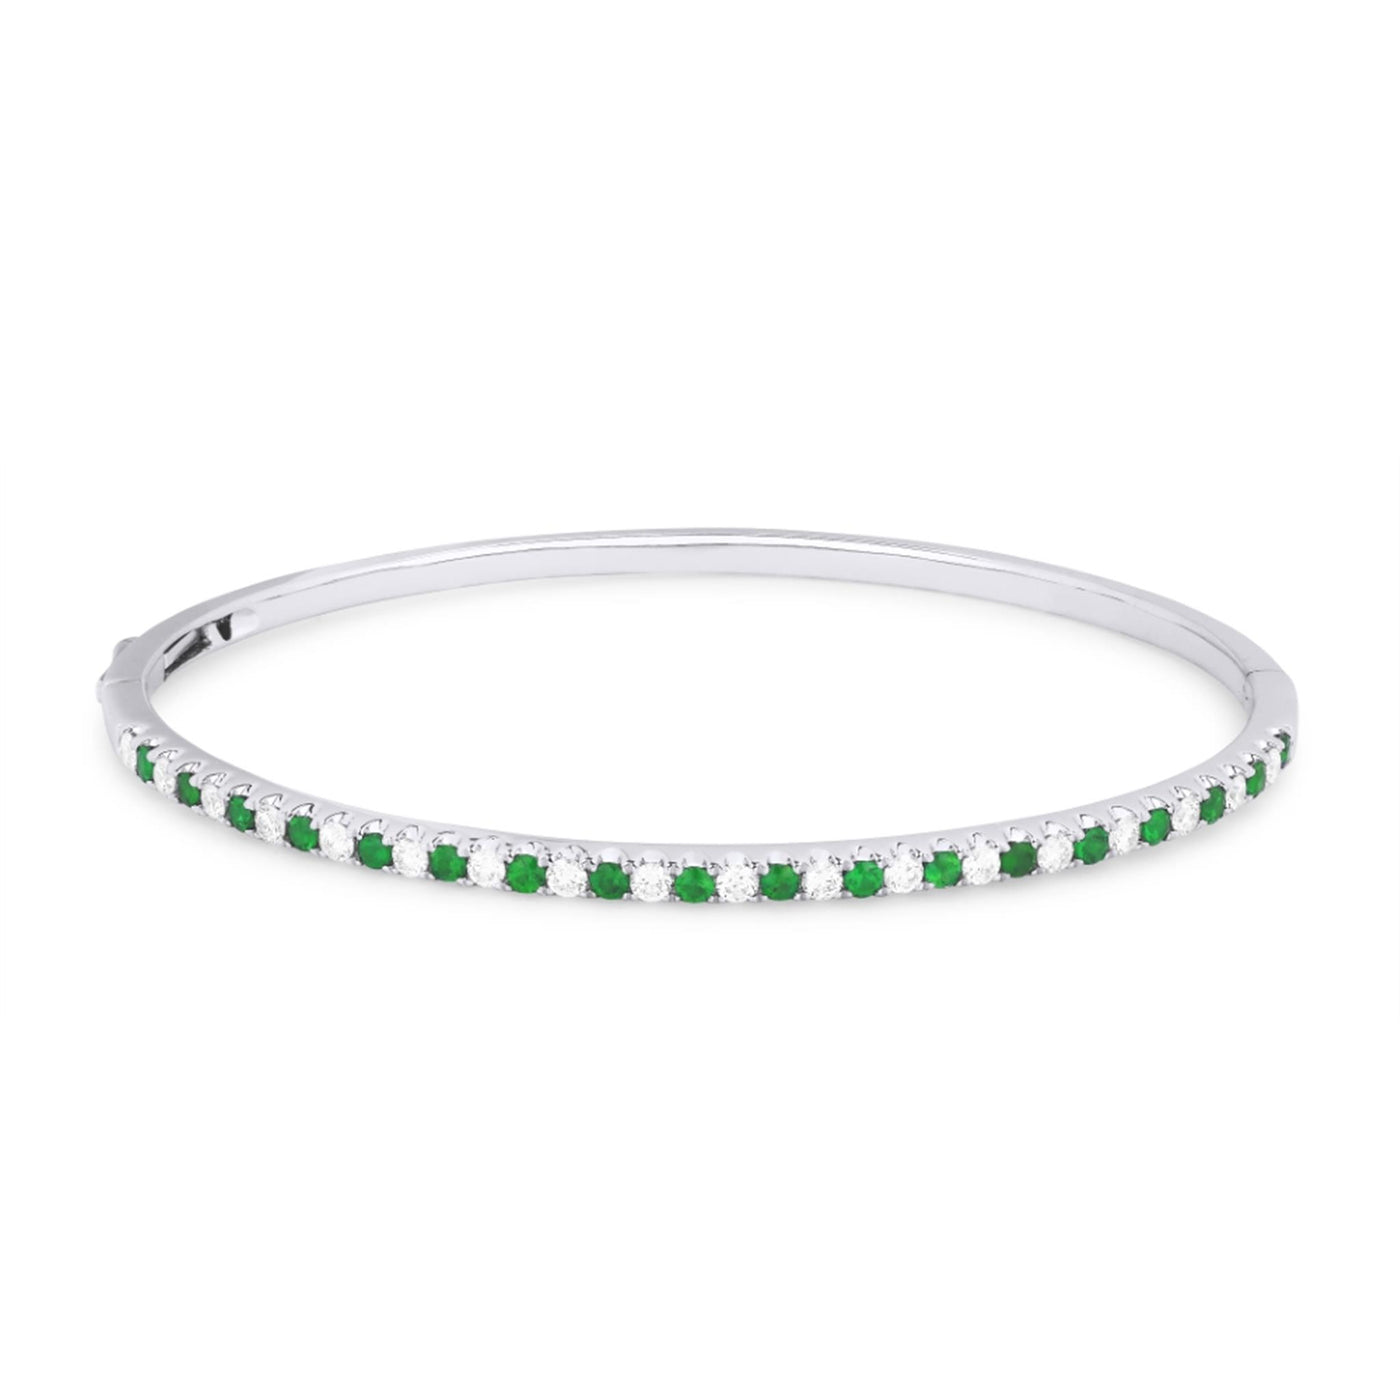 14K White Gold 6.5" Oval Bangle Style Bracelet Featuring Emeralds and Diamonds